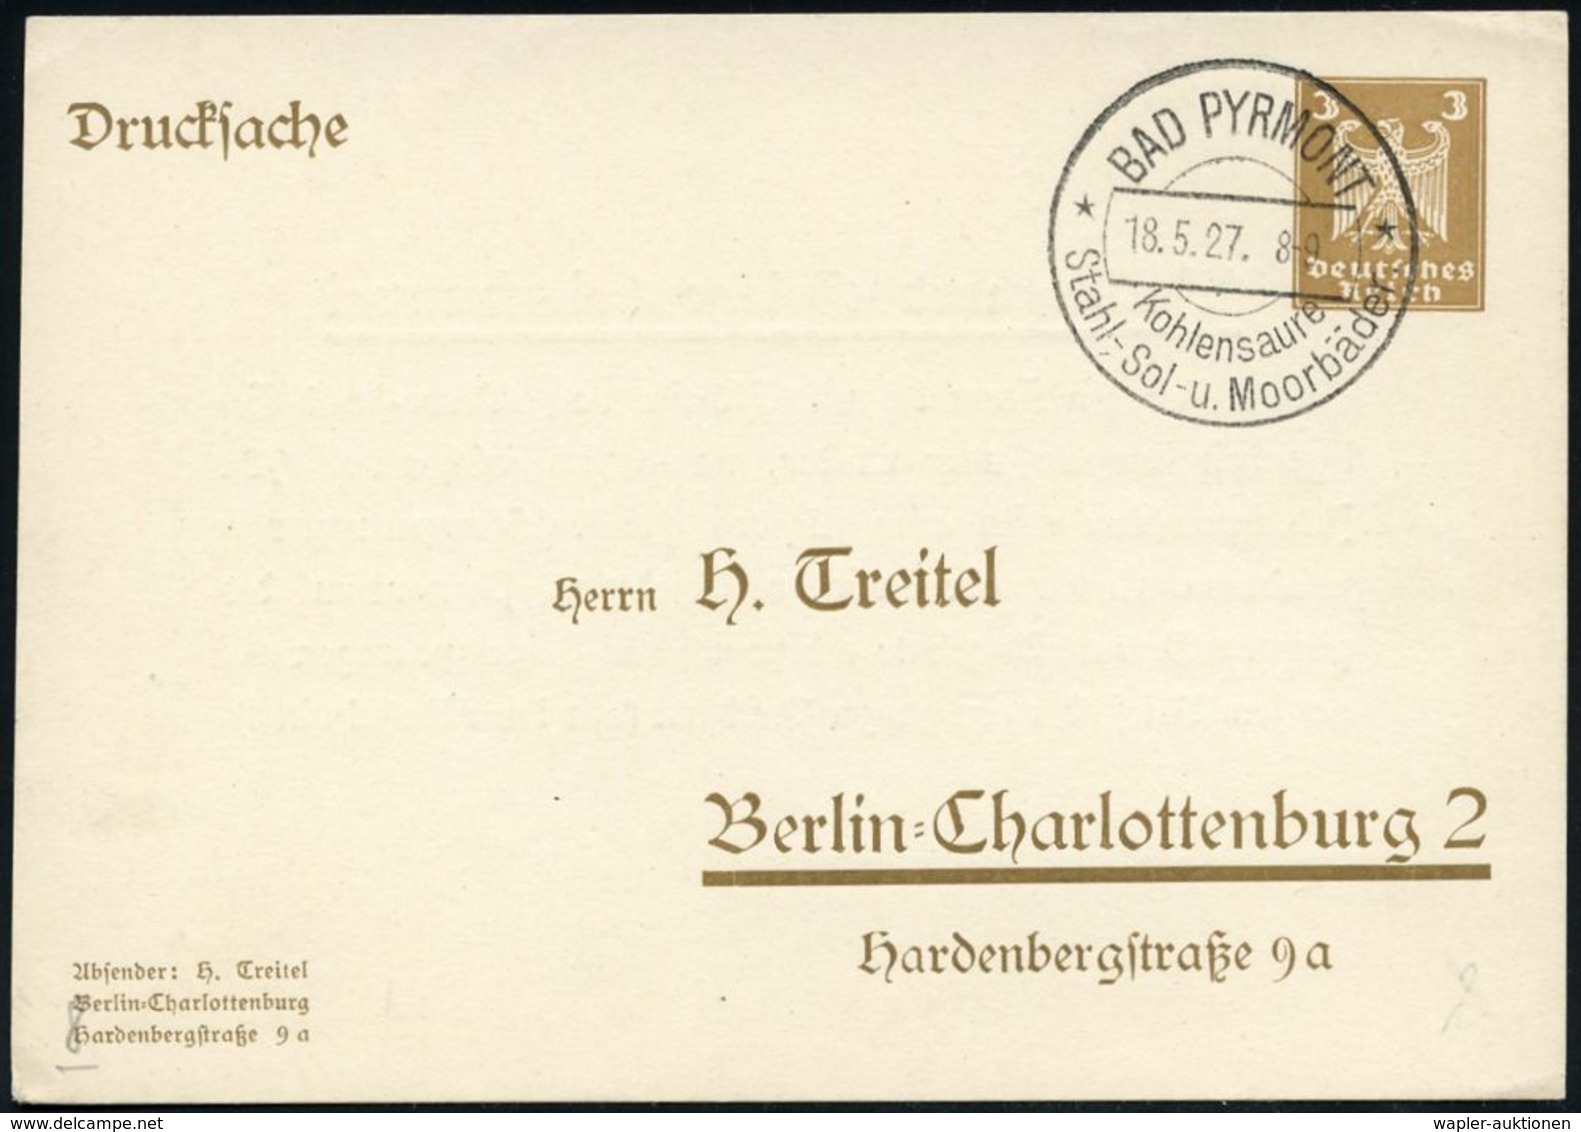 KURORTE / HEILQUELLEN : BAD PYRMONT/ Kohlensäure/ Stahl-,Sol-u.Moorbad 1927 (18.5.) HWSt Auf PP 3 Pf. Goethe (Georg Jaco - Geneeskunde